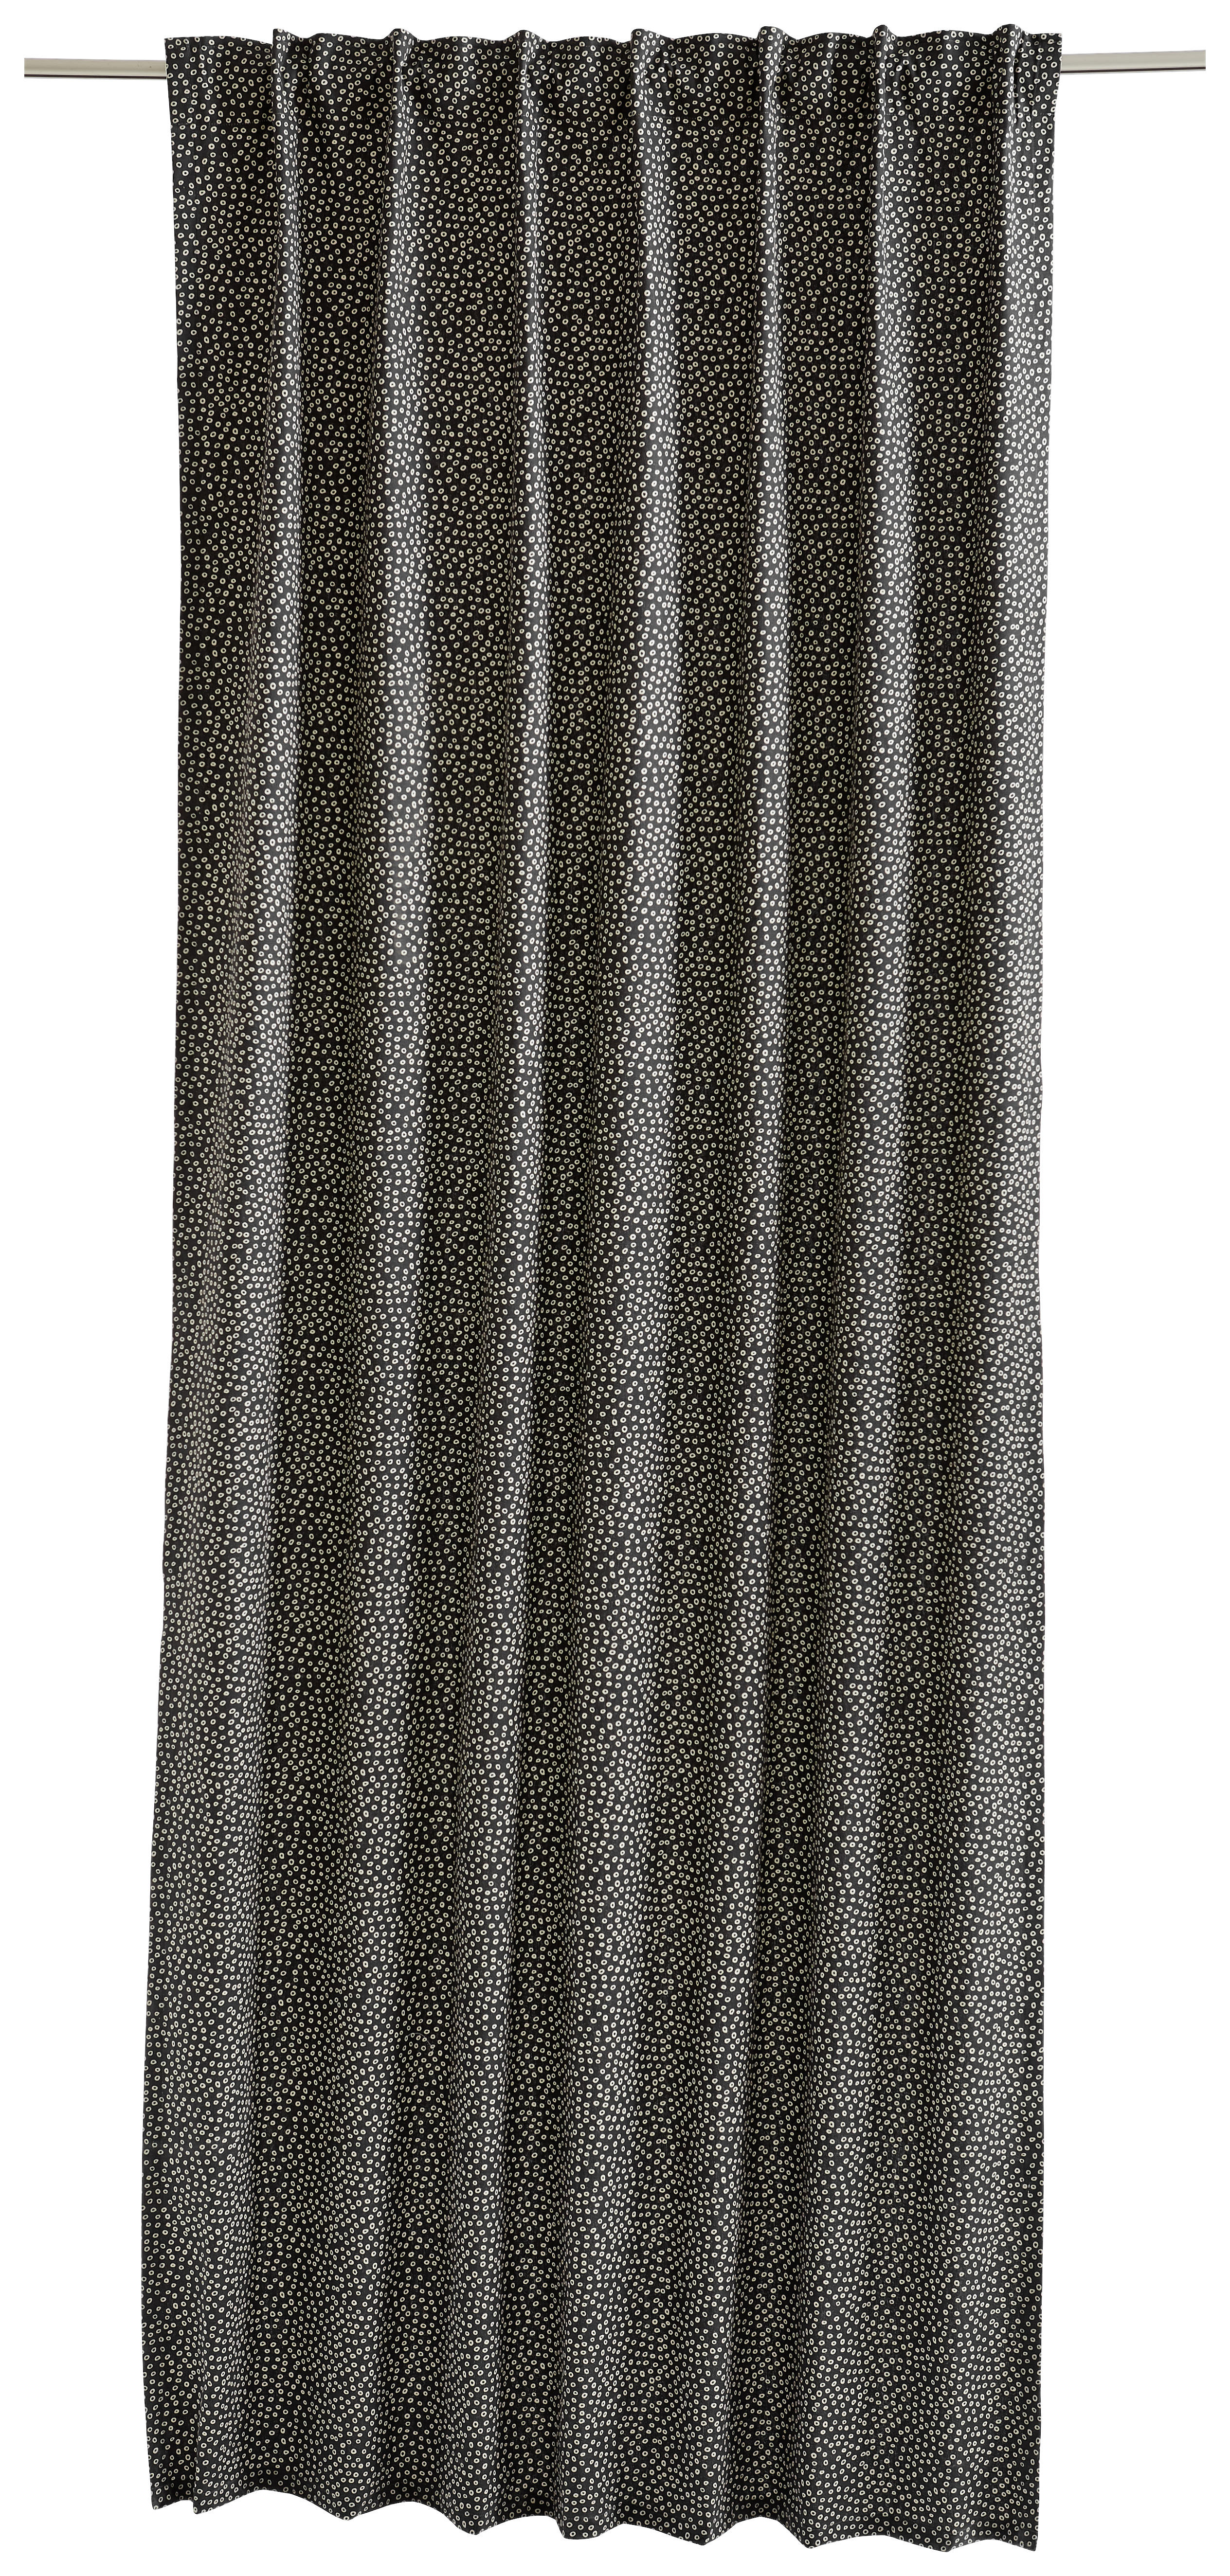 FERTIGVORHANG E-Cata blickdicht 130/250 cm   - Beige/Schwarz, Basics, Textil (130/250cm) - Esprit